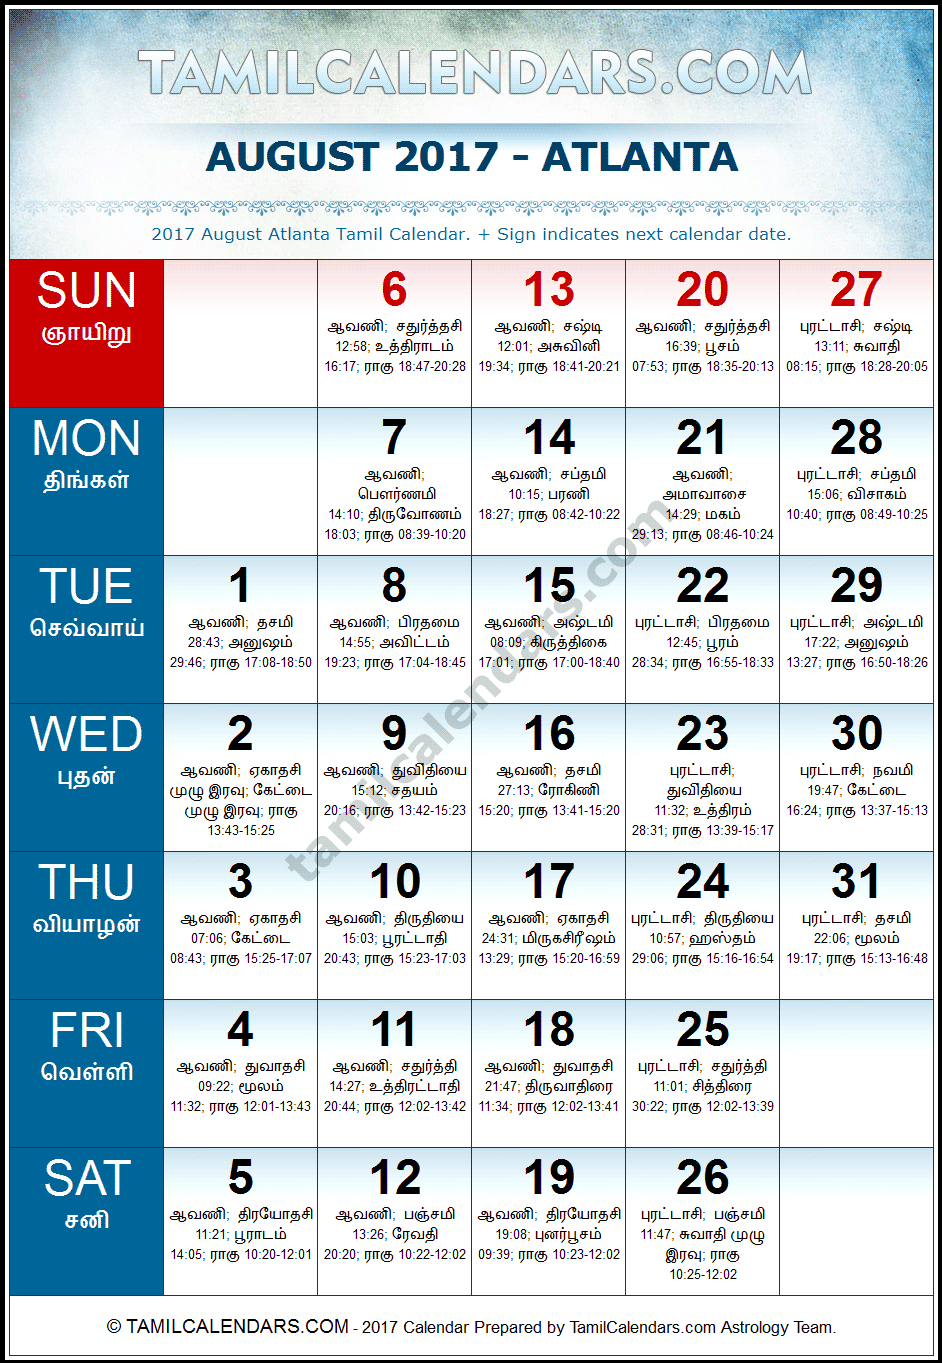 August 2017 Tamil Calendar for Atlanta, USA